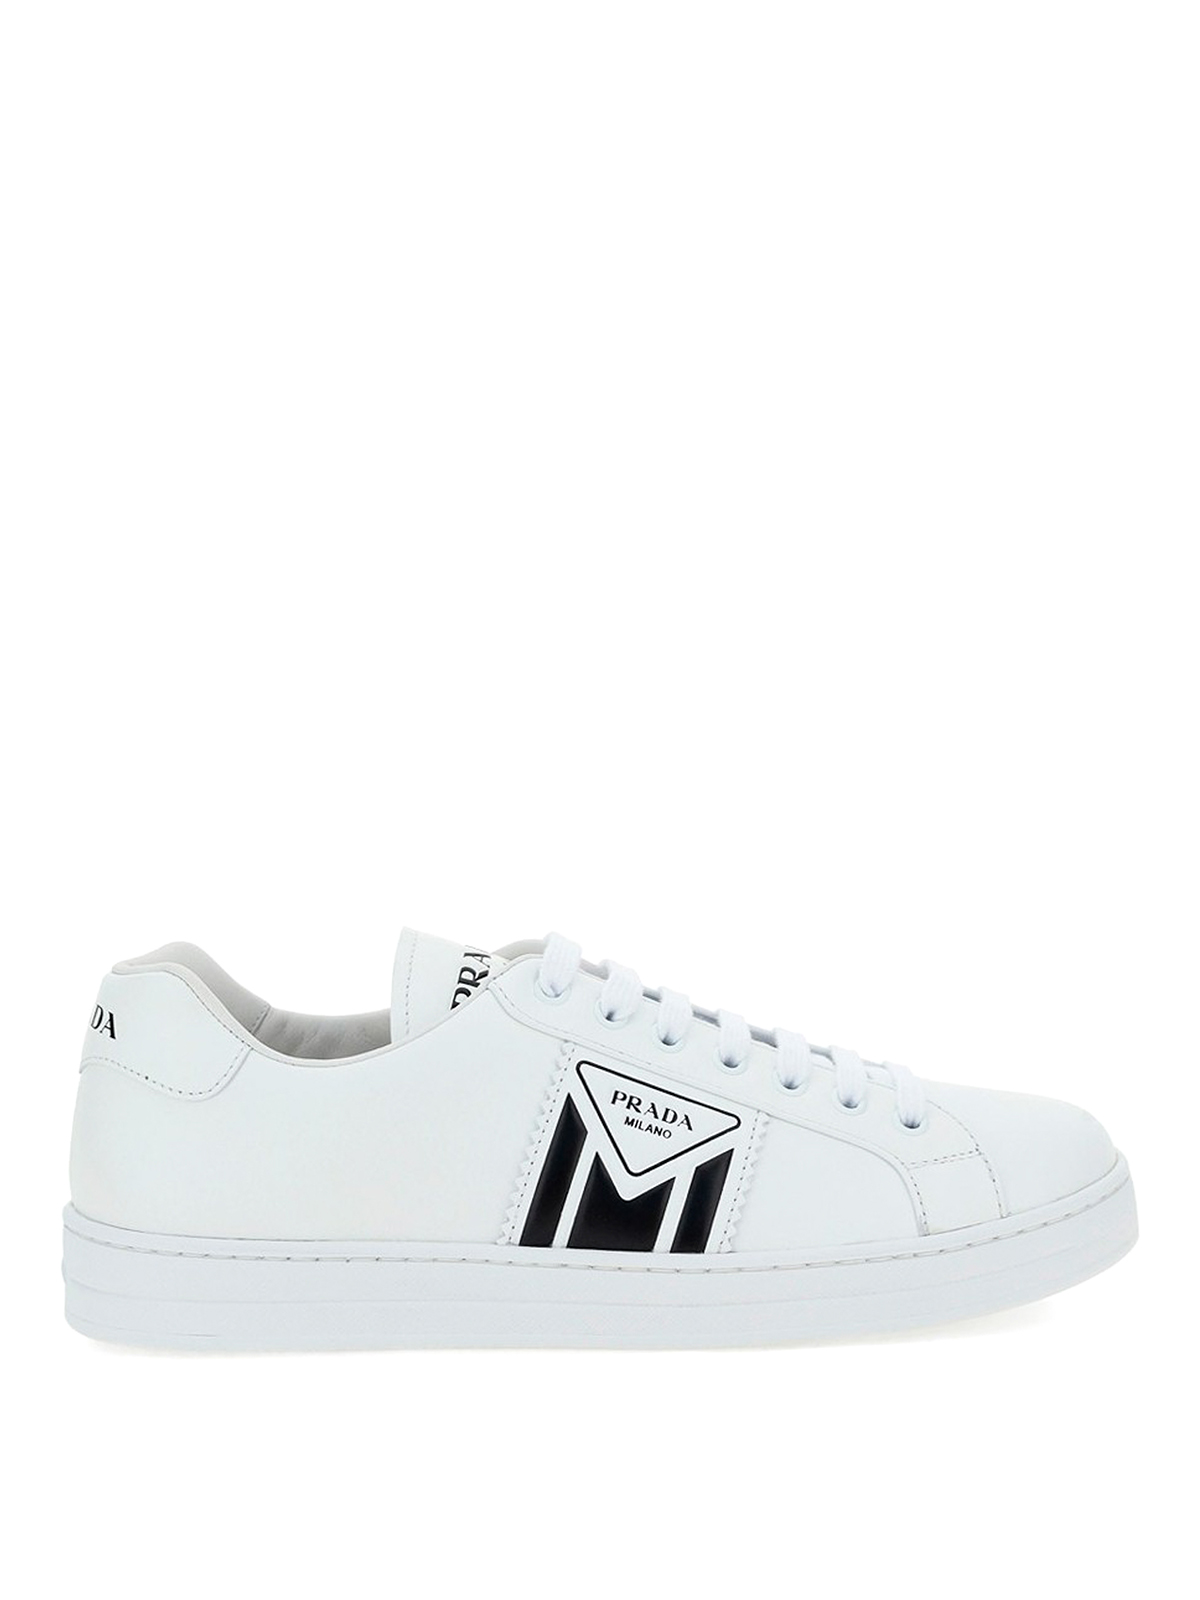 Prada - Classic white leather sneakers 